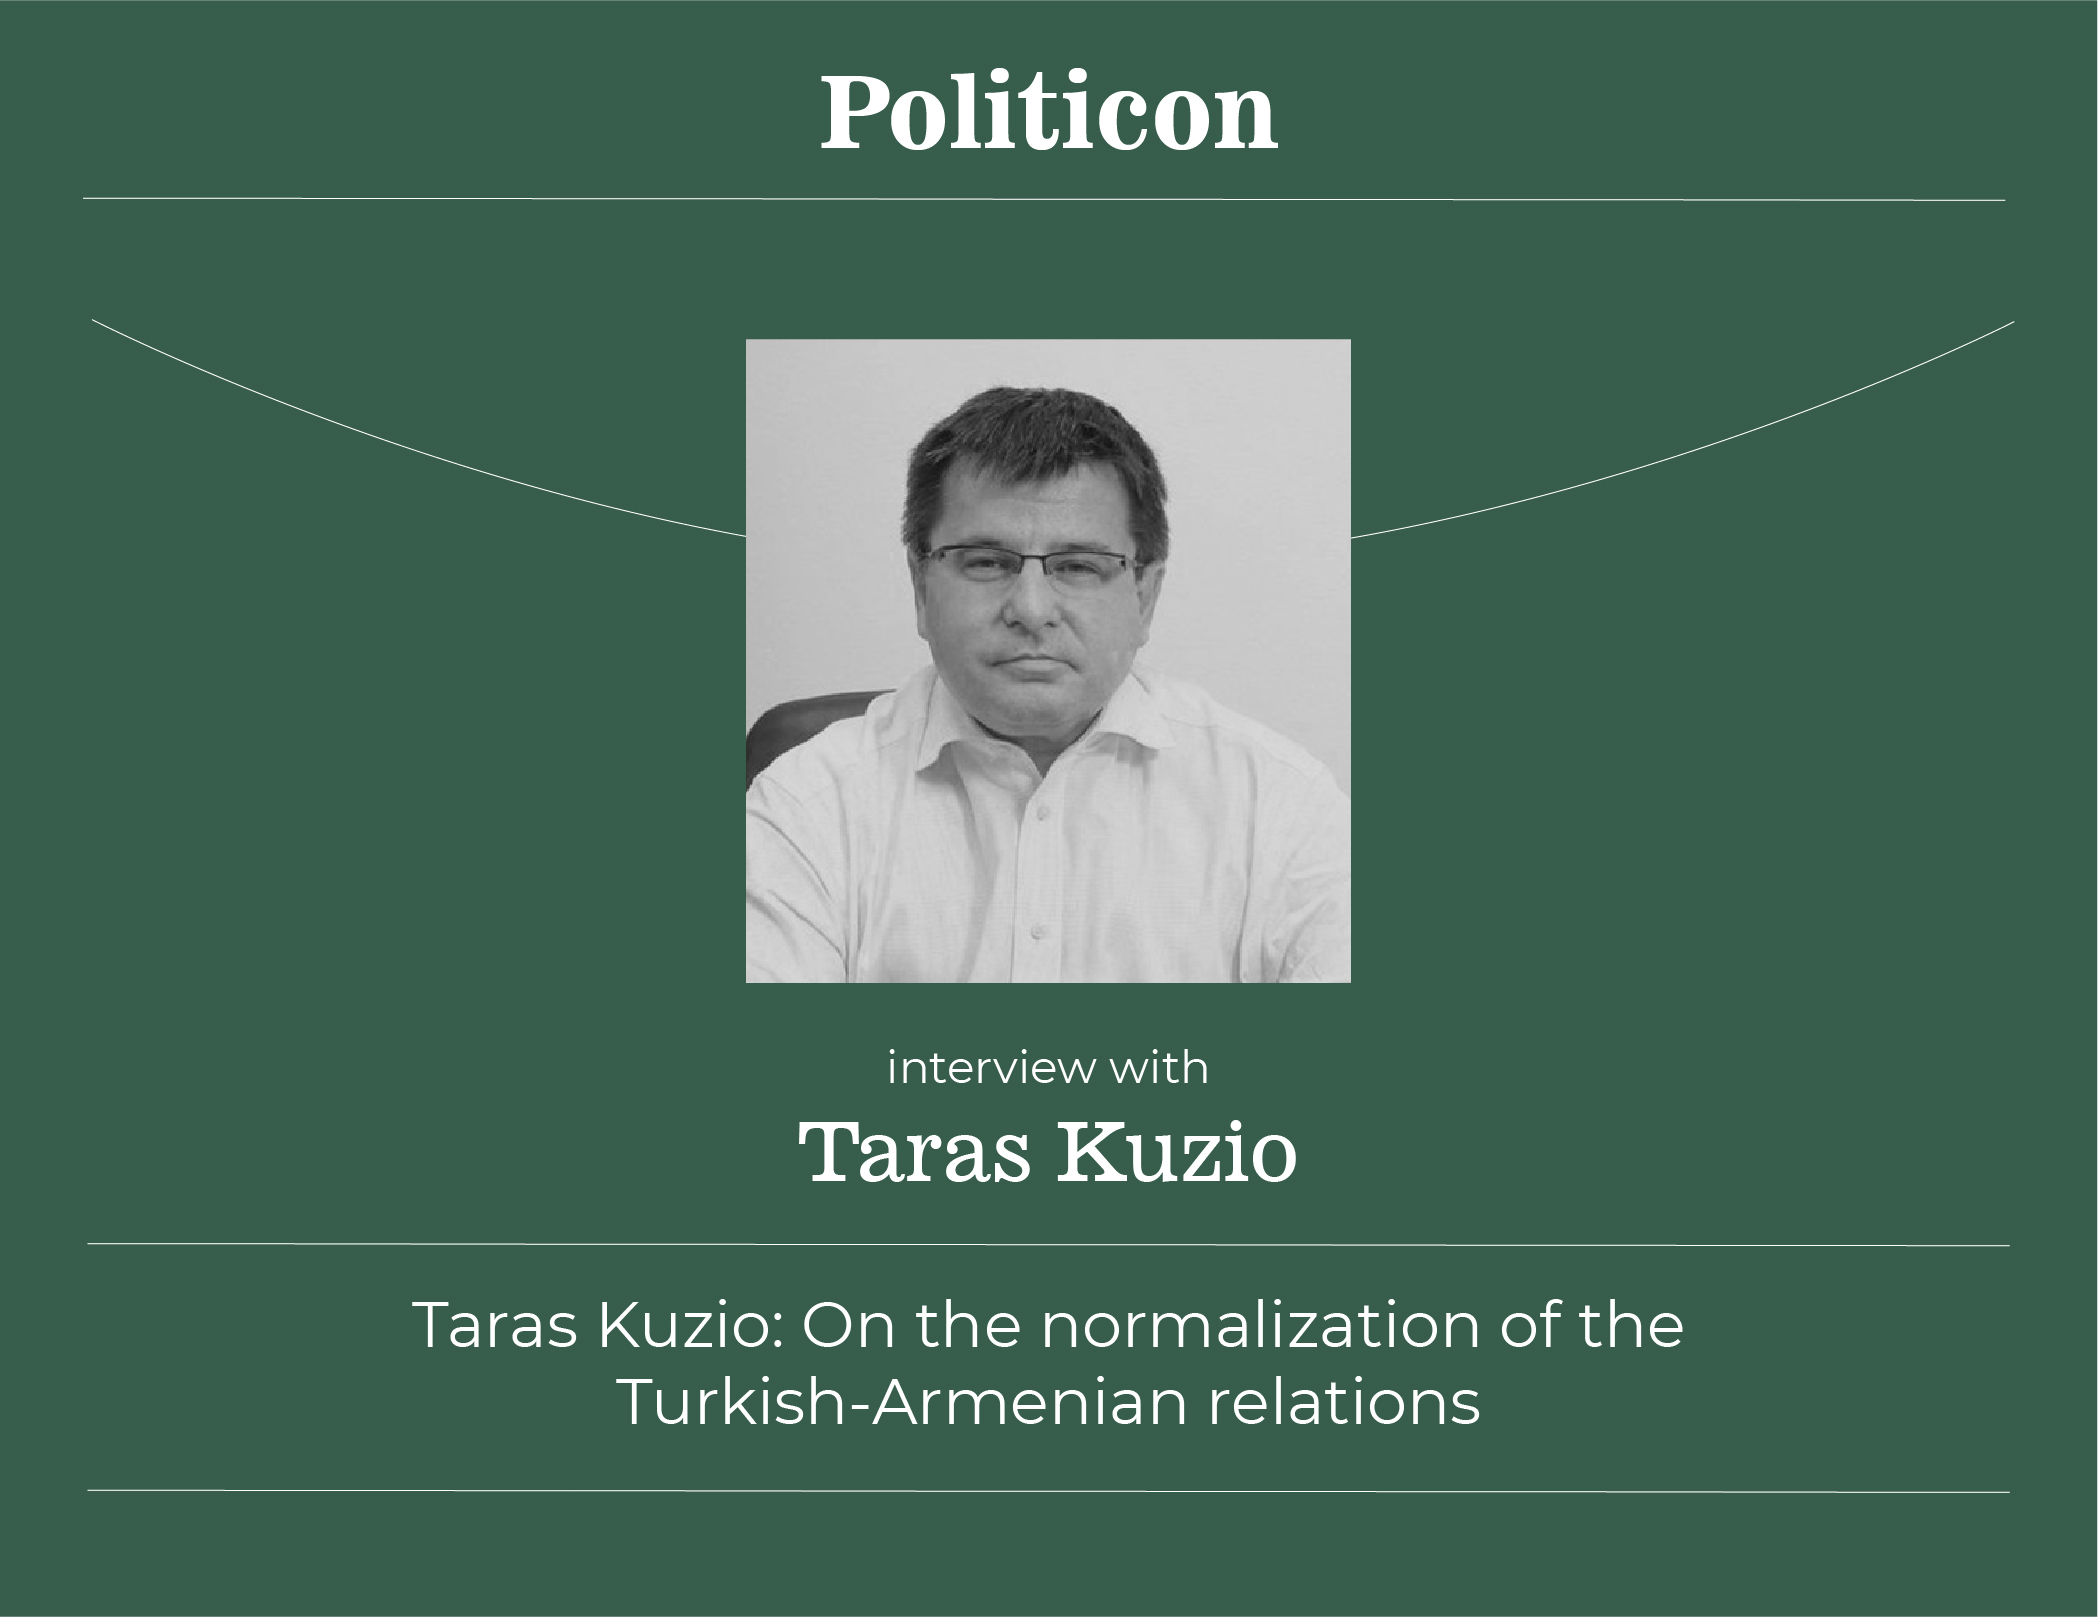 Taras Kuzio: On the normalization of the Turkish-Armenian relations